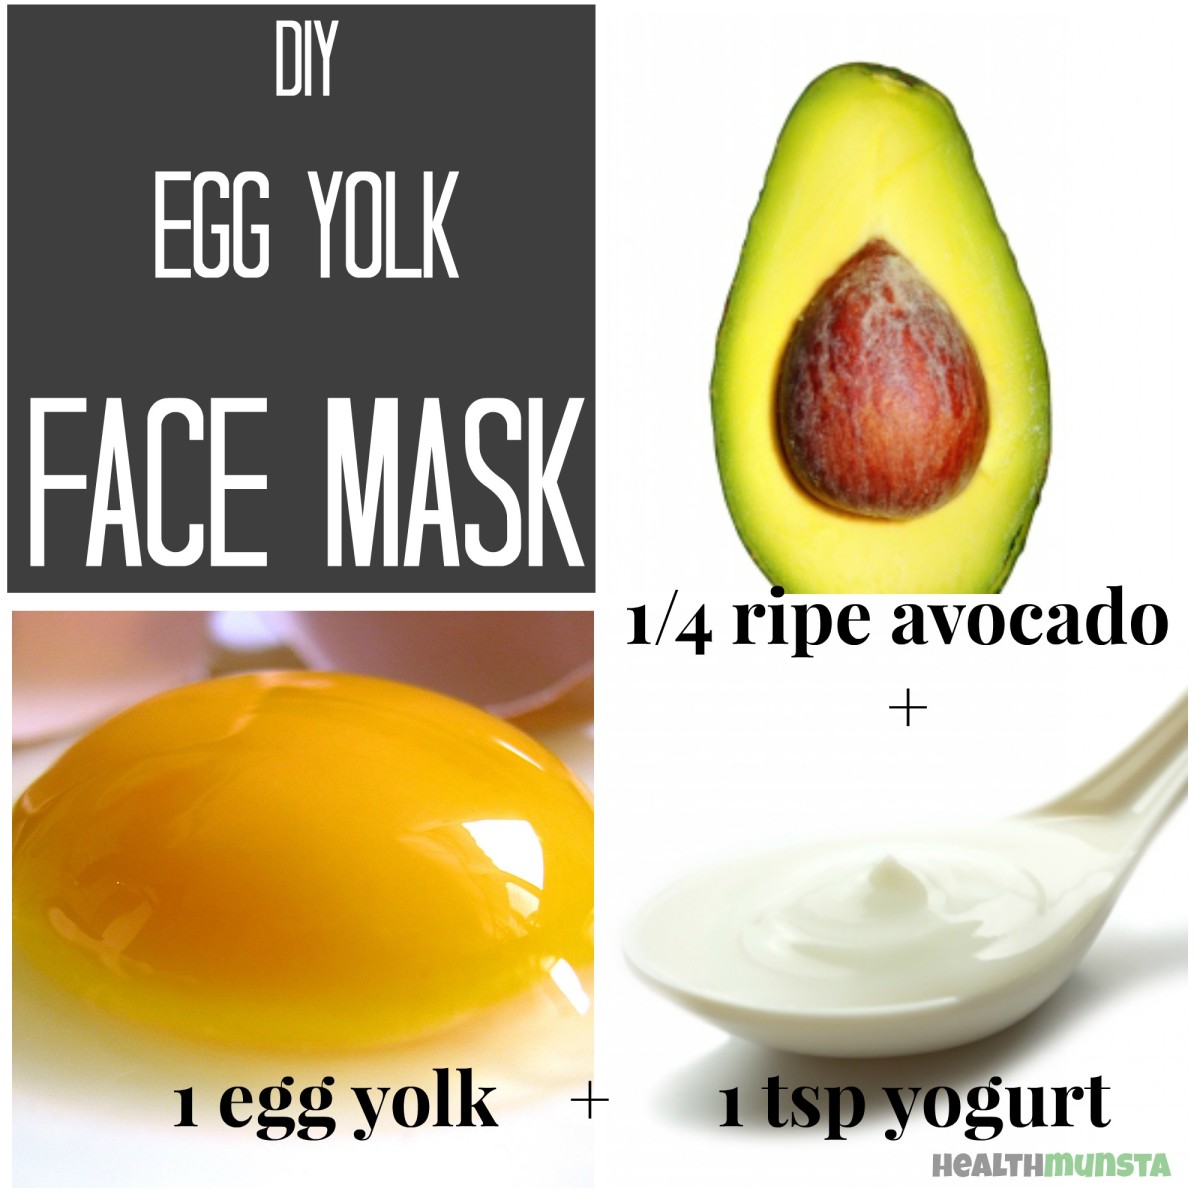 Nourishing egg yolk face mask for all skin types with avocado and yogurt.